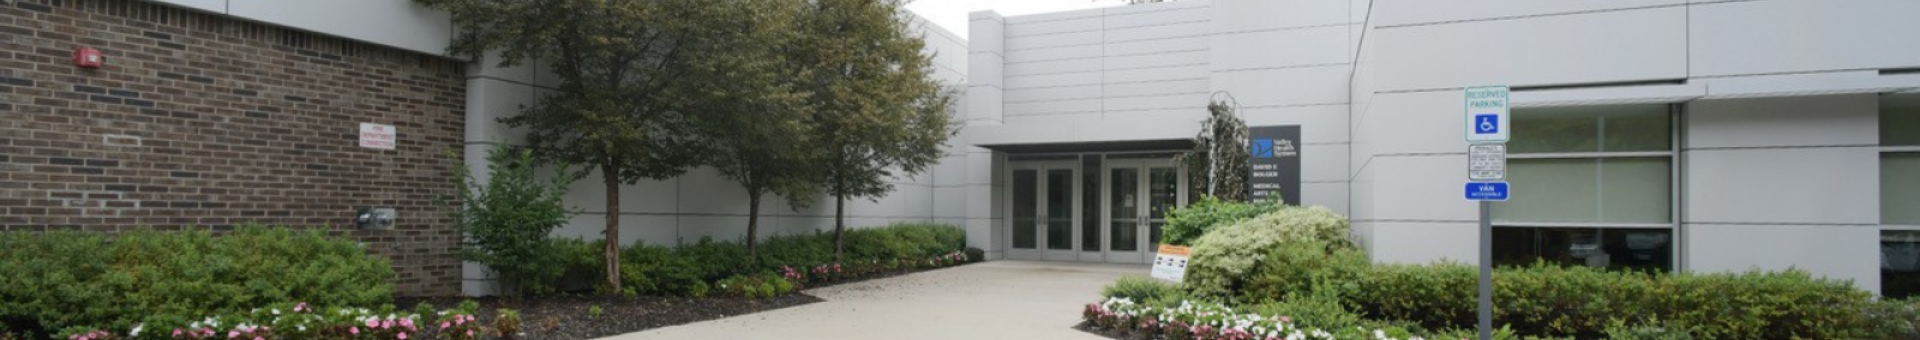 Entrance to the Bolger Medical Arts Building